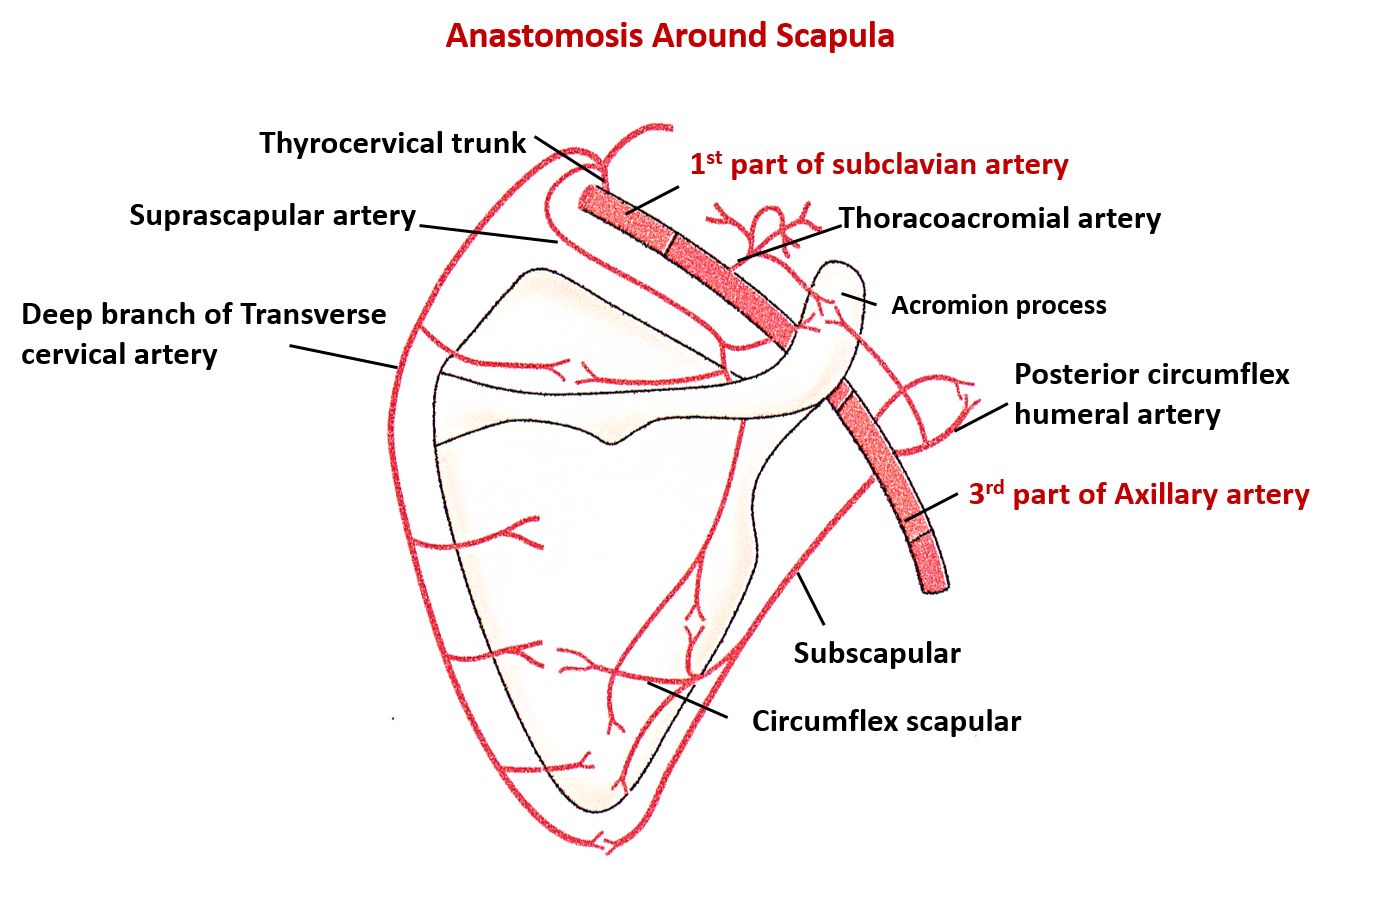 Arterial anastomosis around scapula